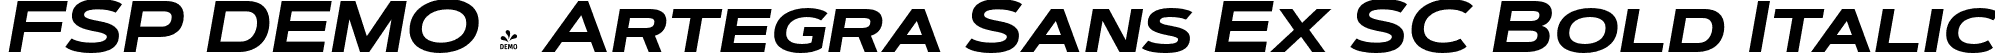 FSP DEMO - Artegra Sans Ex SC Bold Italic font - Fontspring-DEMO-artegra_sans-extended-sc-700-bold-italic.otf